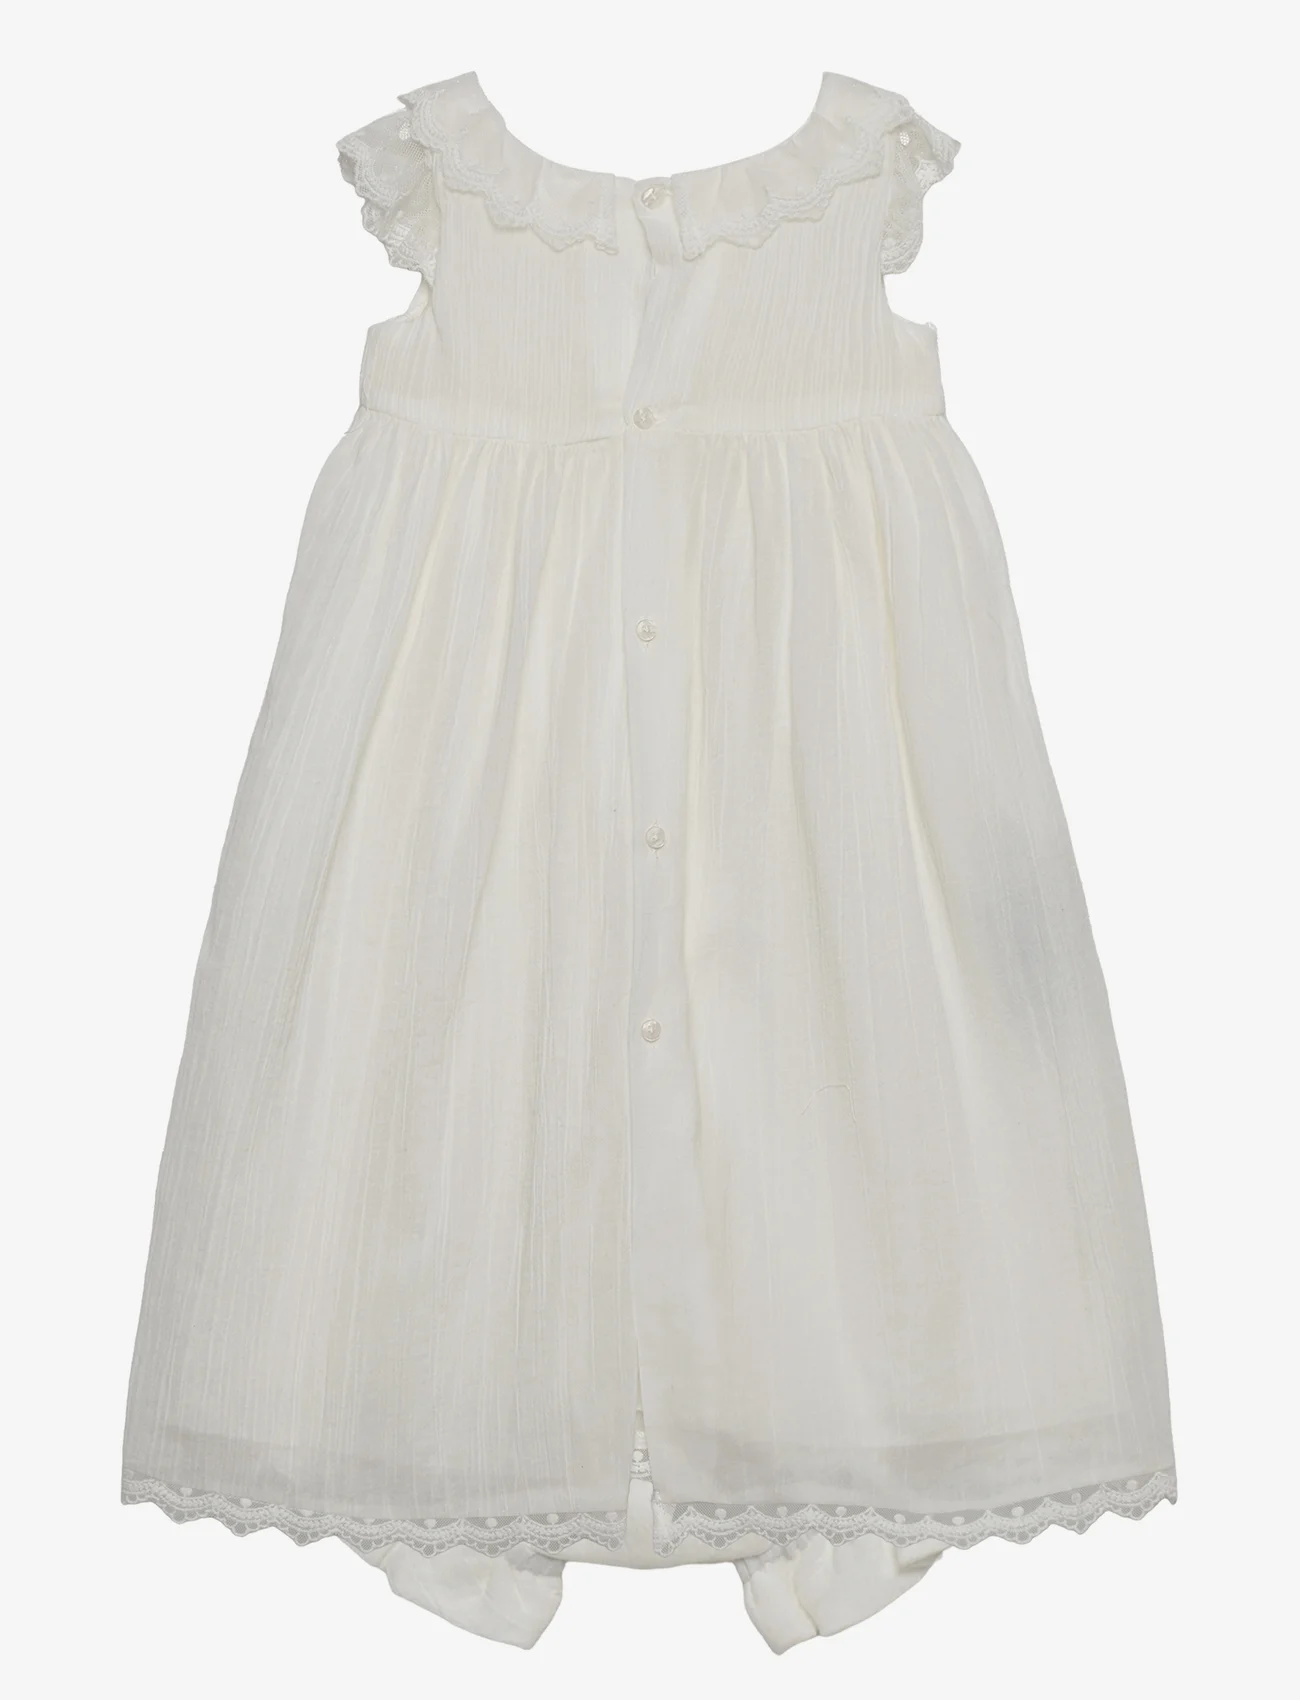 Mango - Skirt with embroidered details and frog - Ärmlösa babyklänningar - natural white - 1